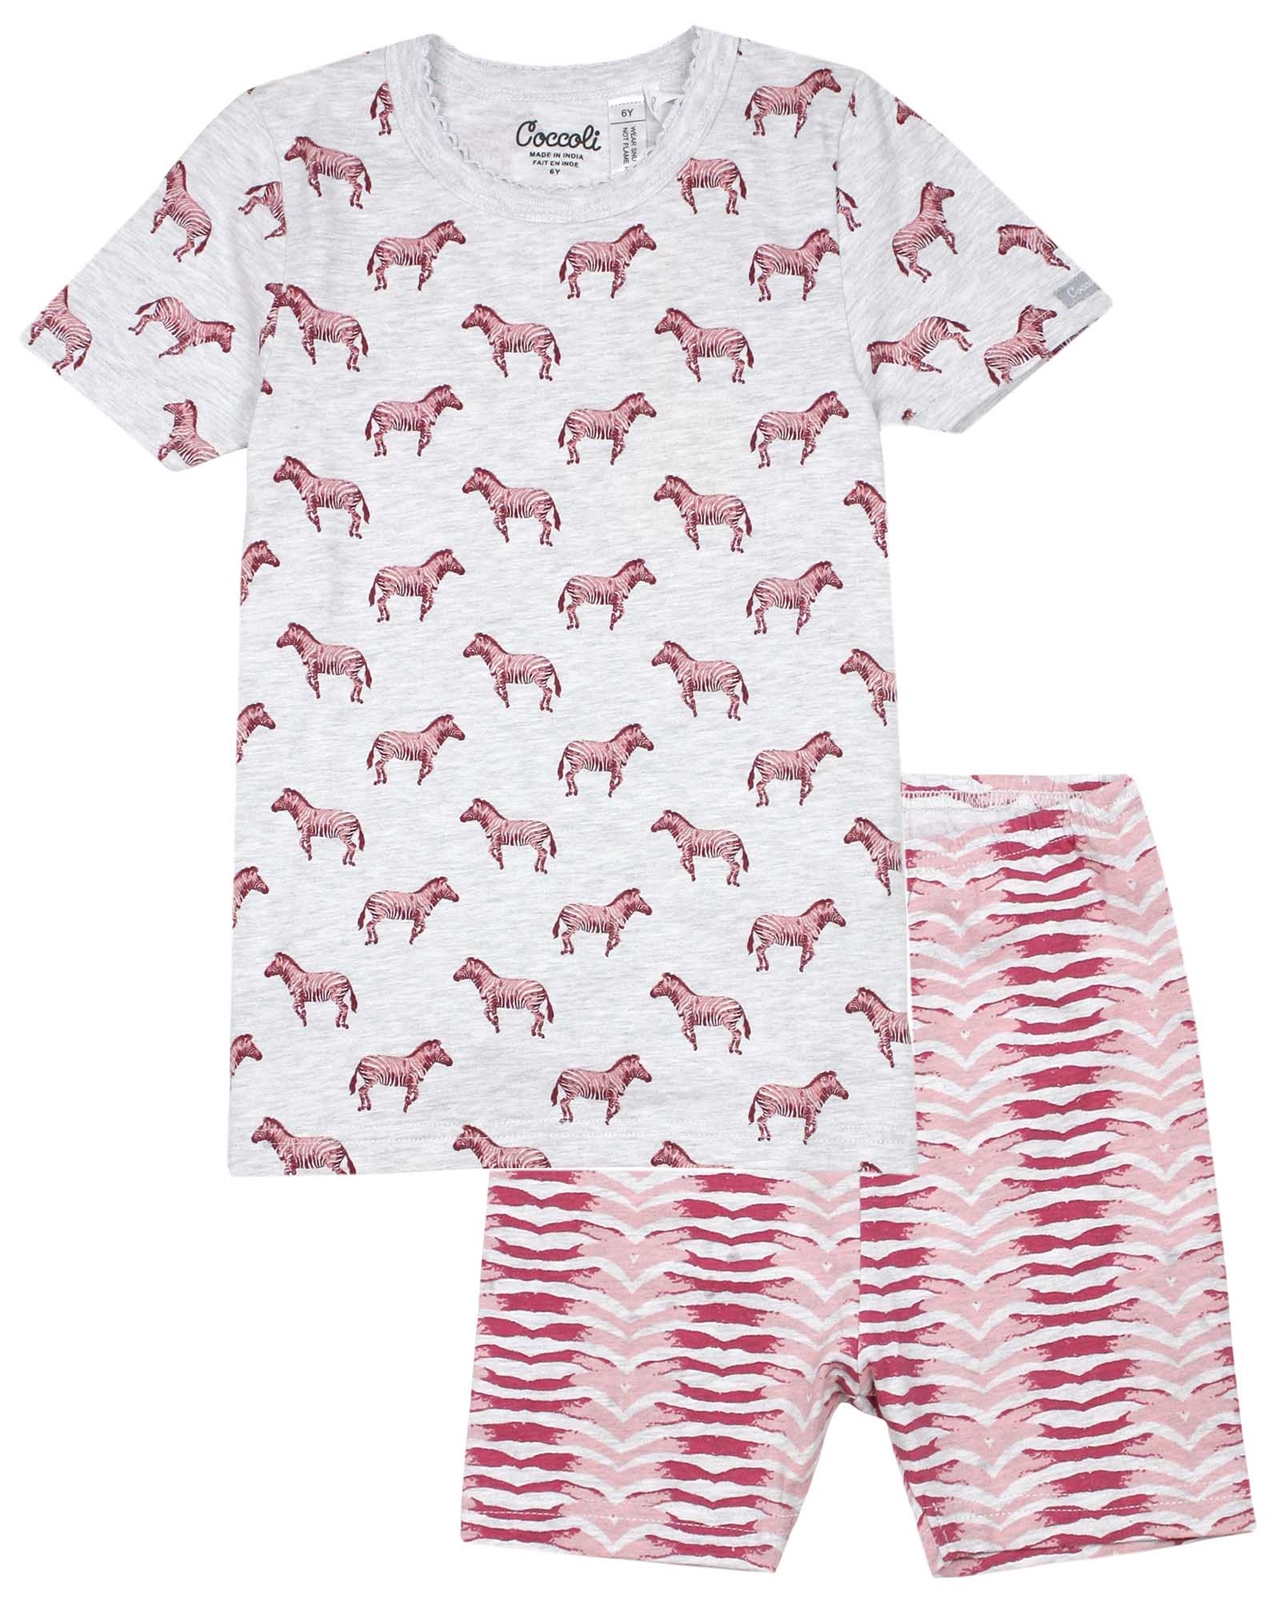 COCCOLI Girls Shorts Pyjamas Set in Zebra Print - Coccoli Sleepwear -  Spring/Summer 20212020/21